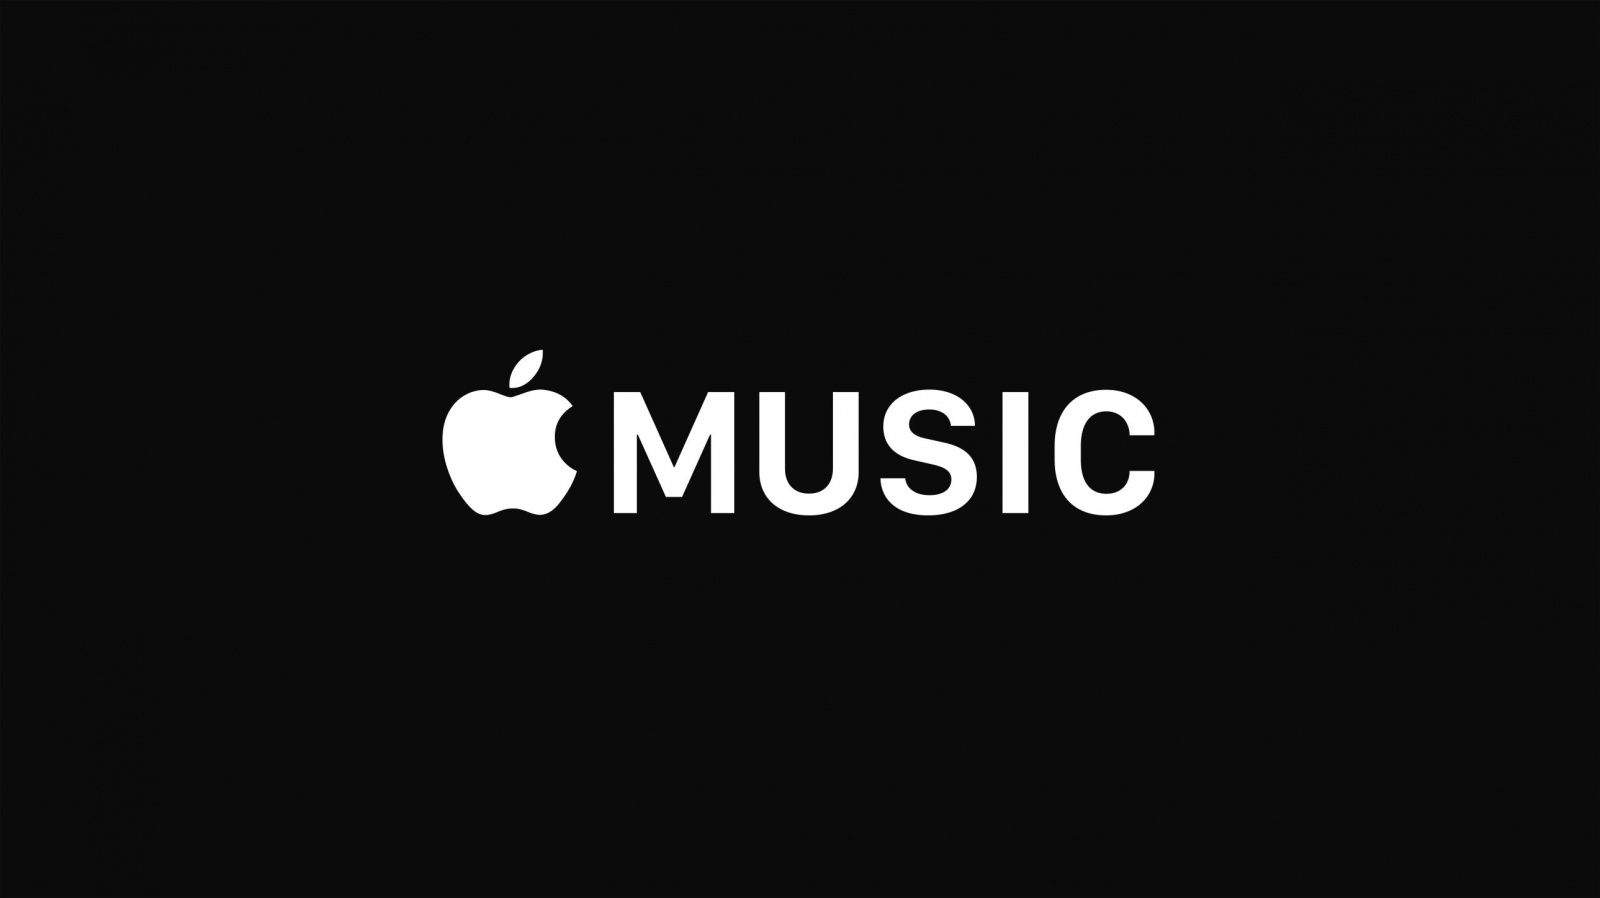 Apple Music is preparing for invasion